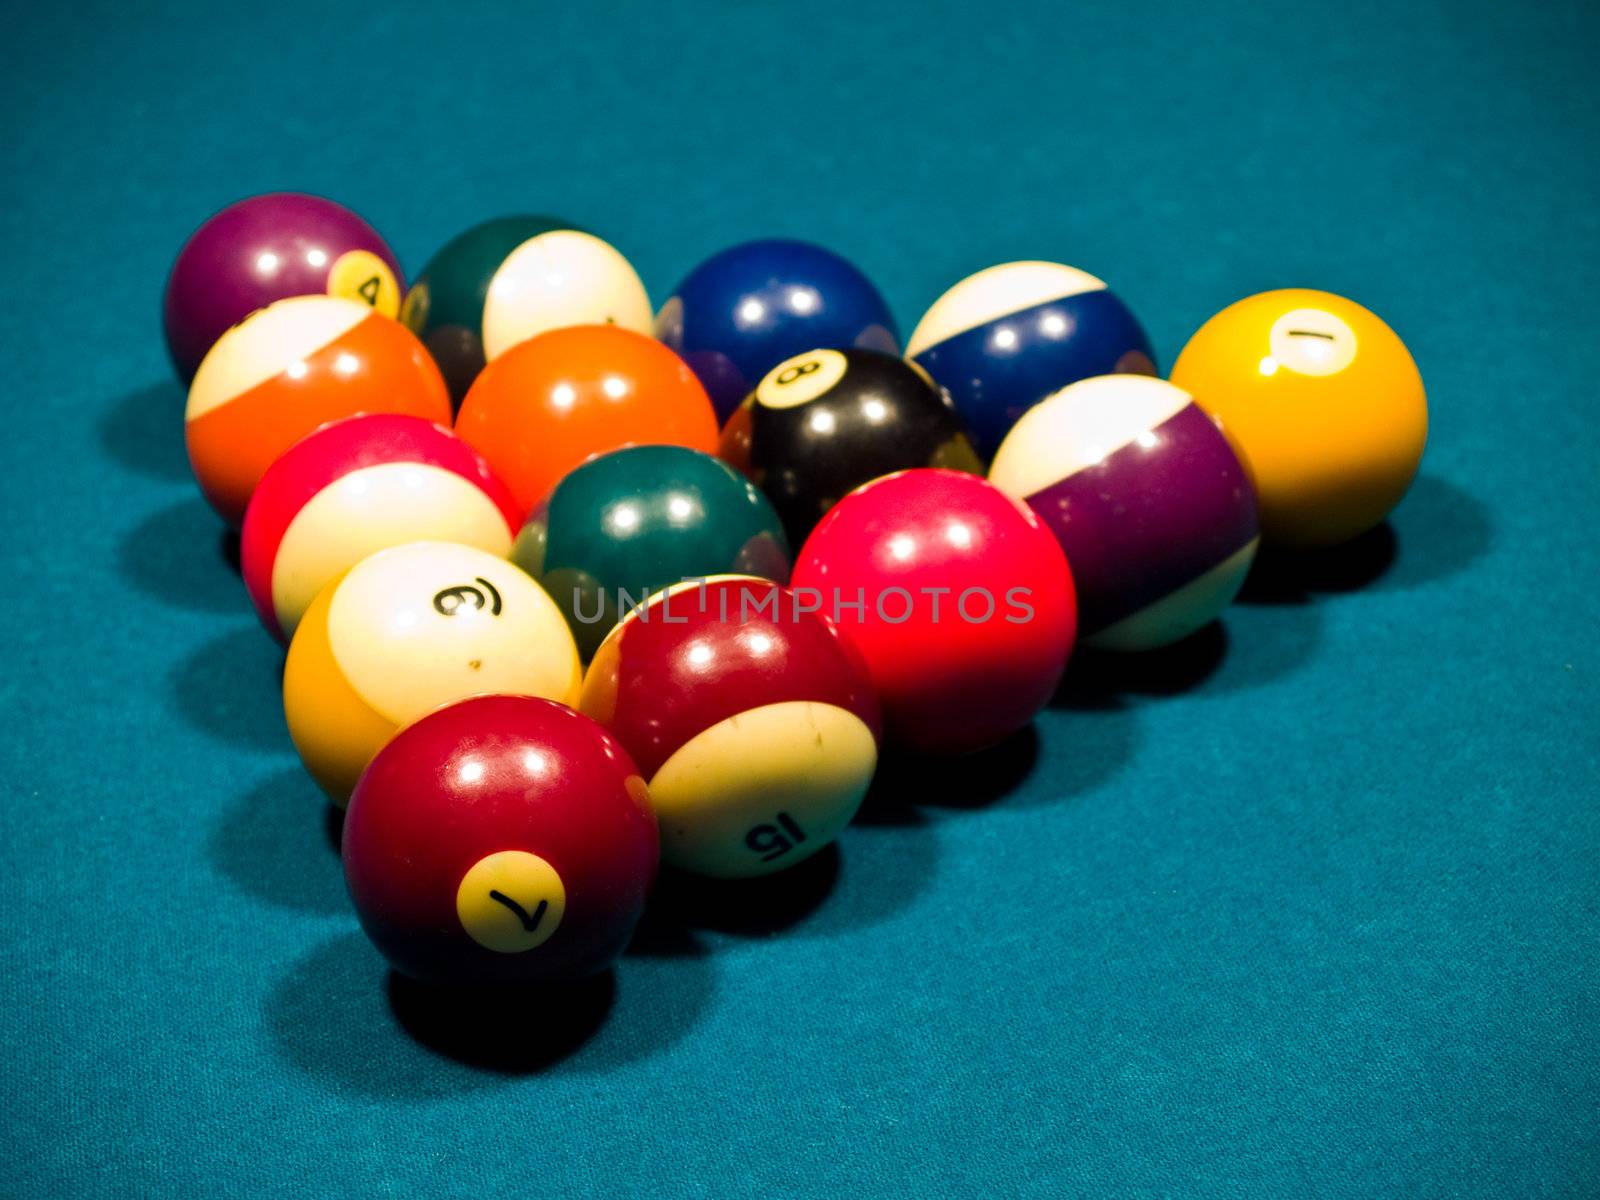 Billiards balls on a green pool table